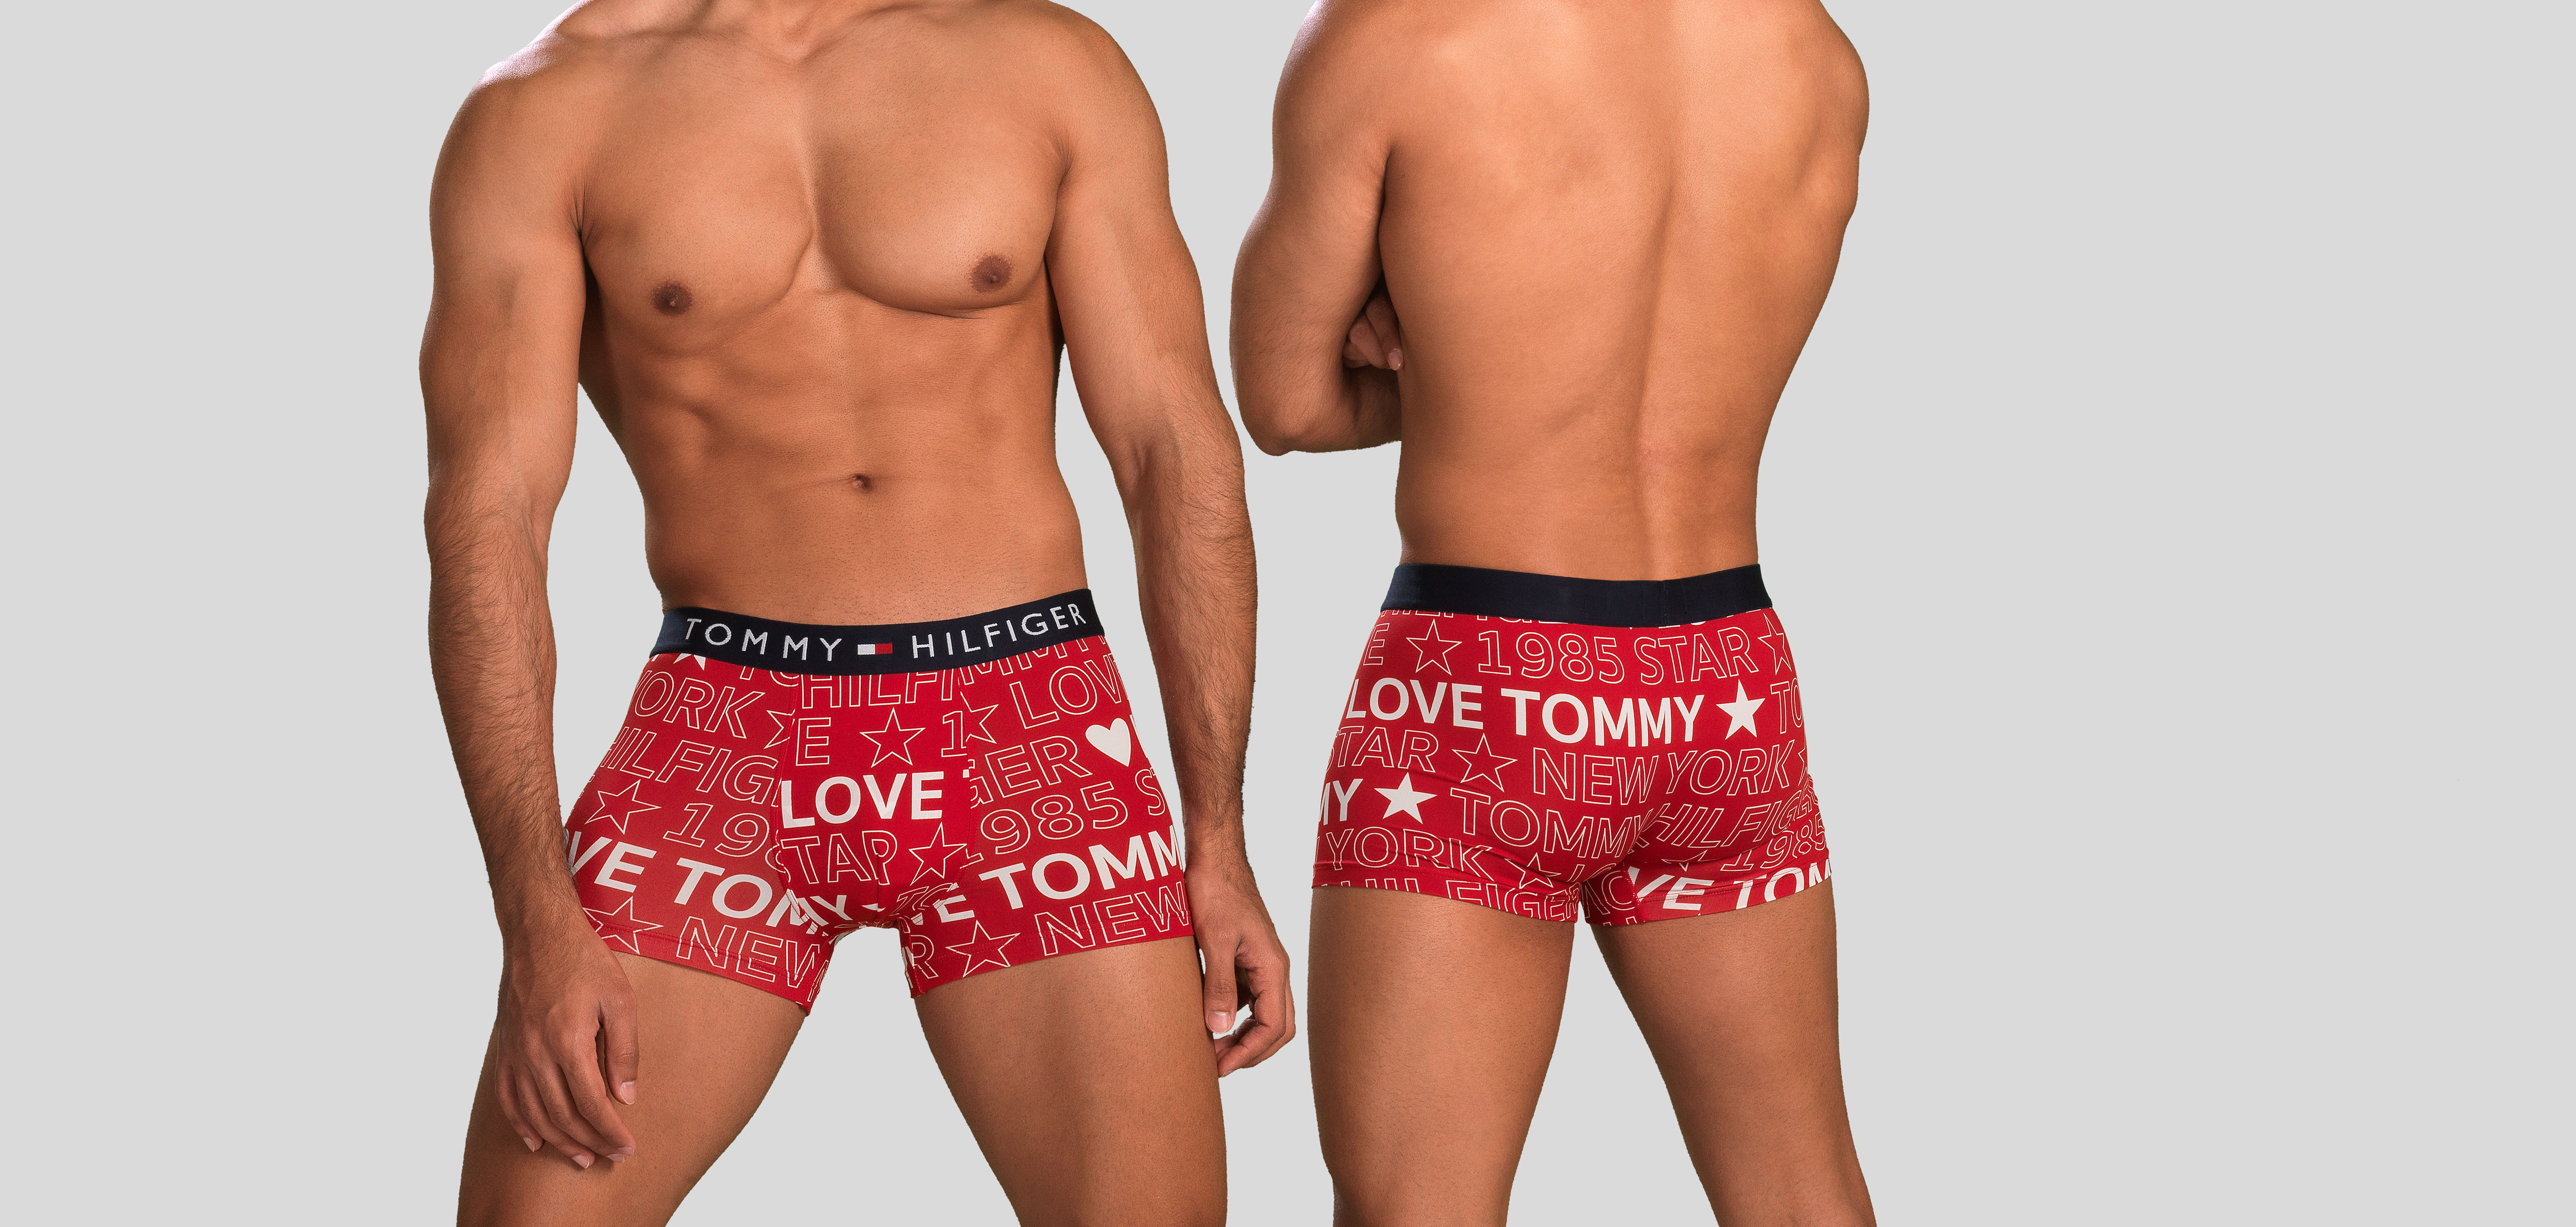 Tommy Hilfiger Love Tommy Valentine Star Boxershort 524,